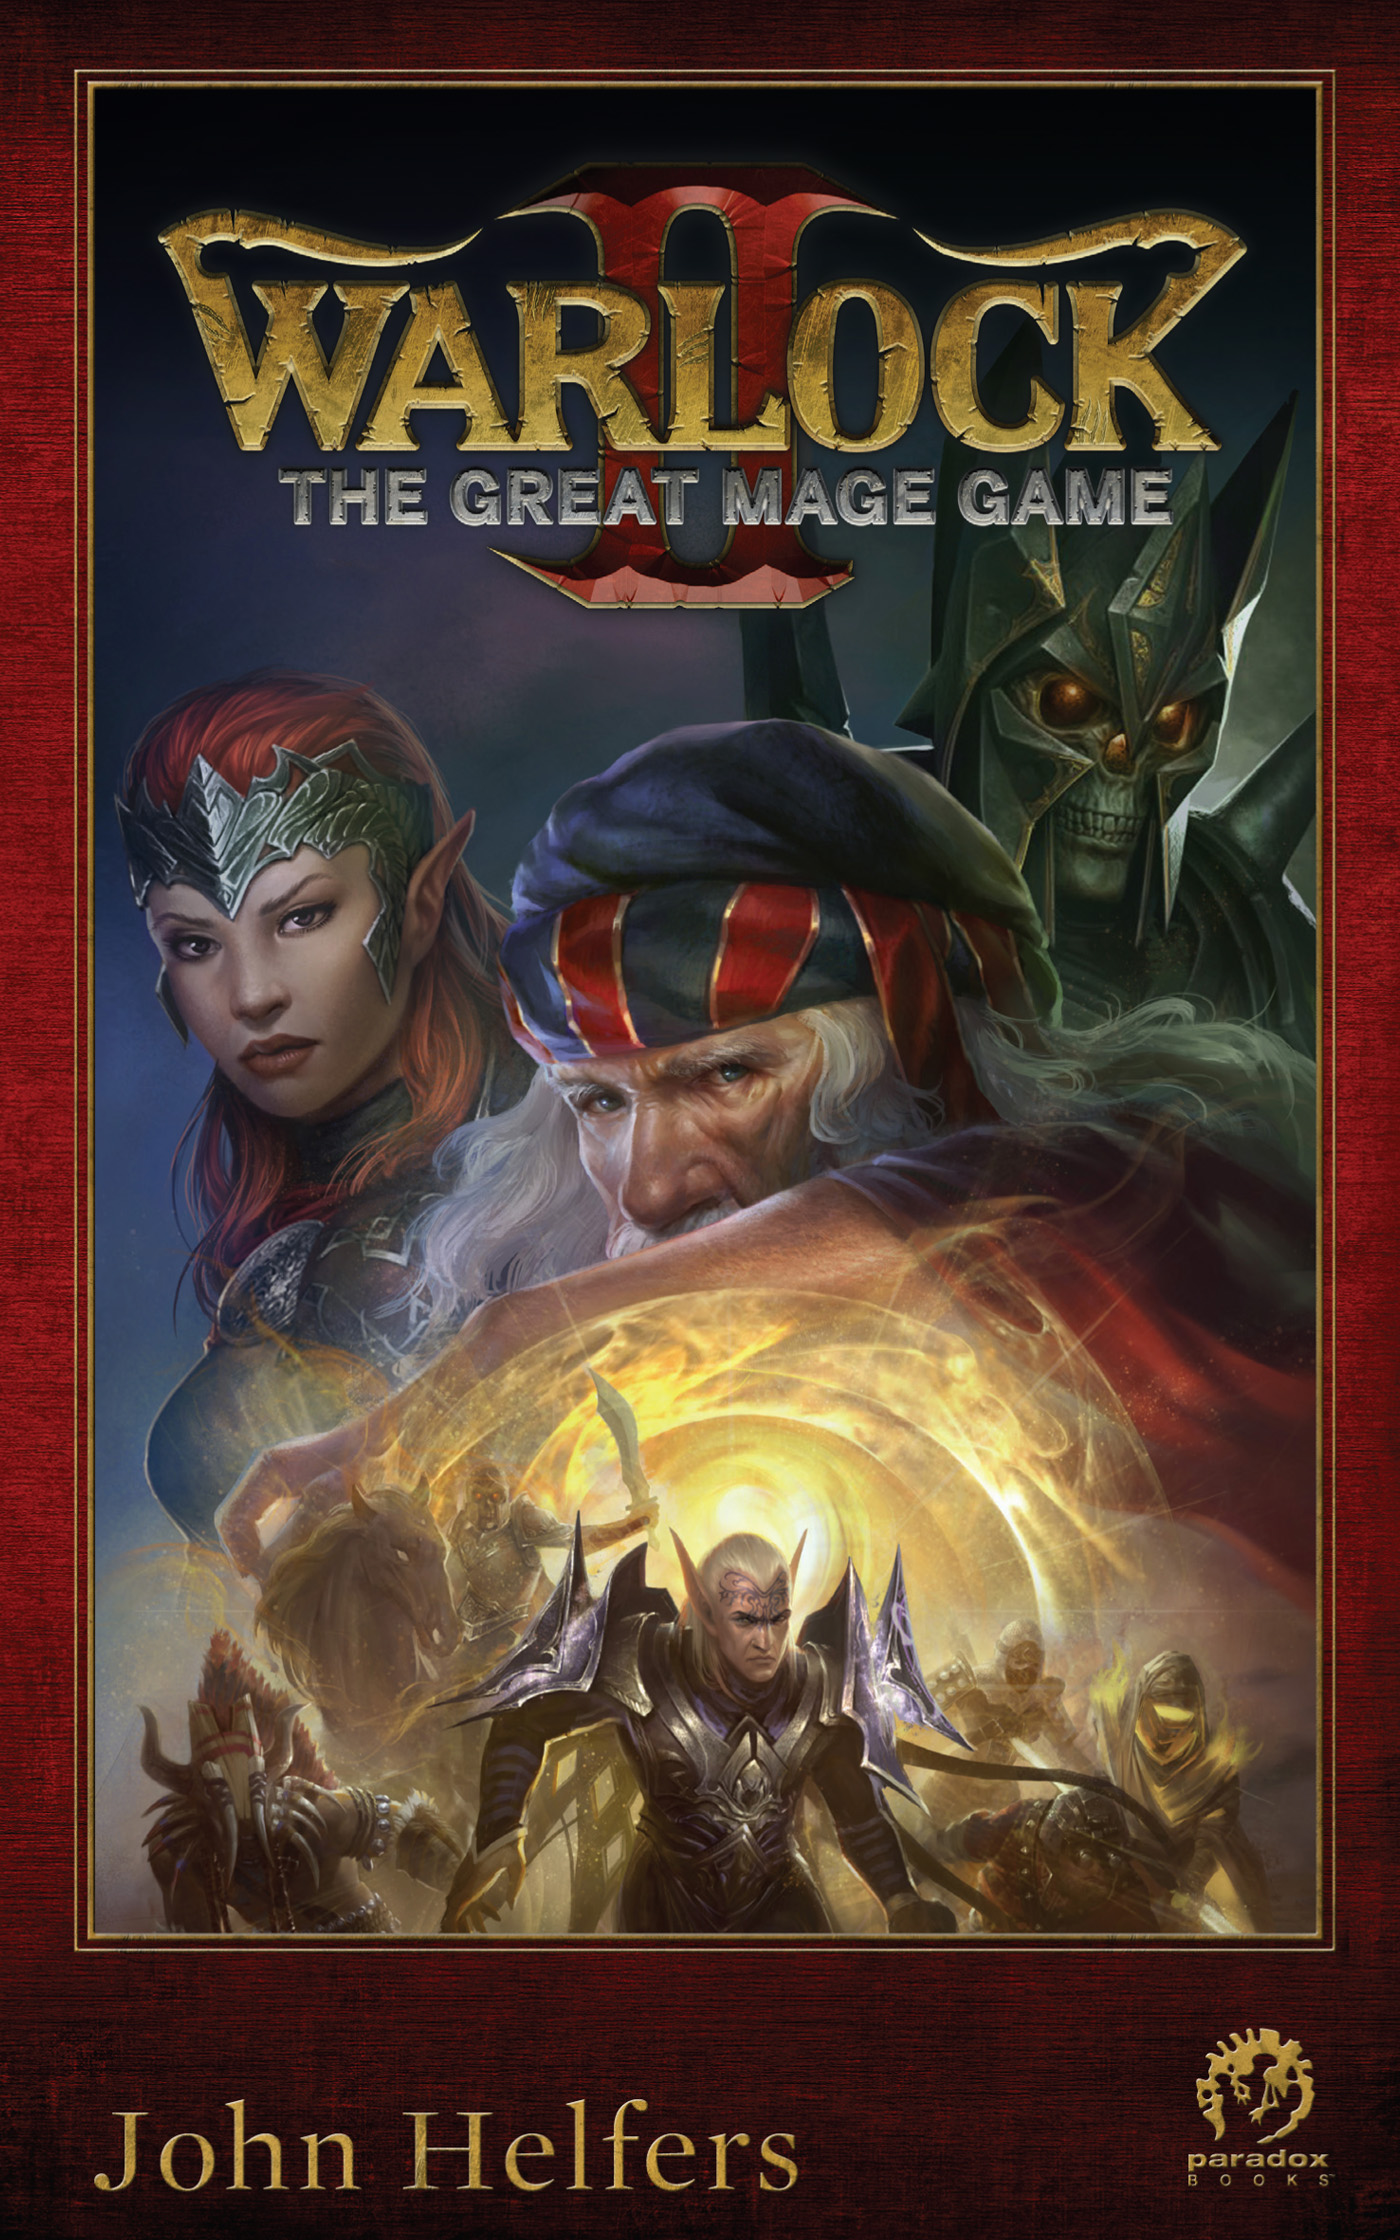 Warlock 2 E-book: The Great Mage Game screenshot